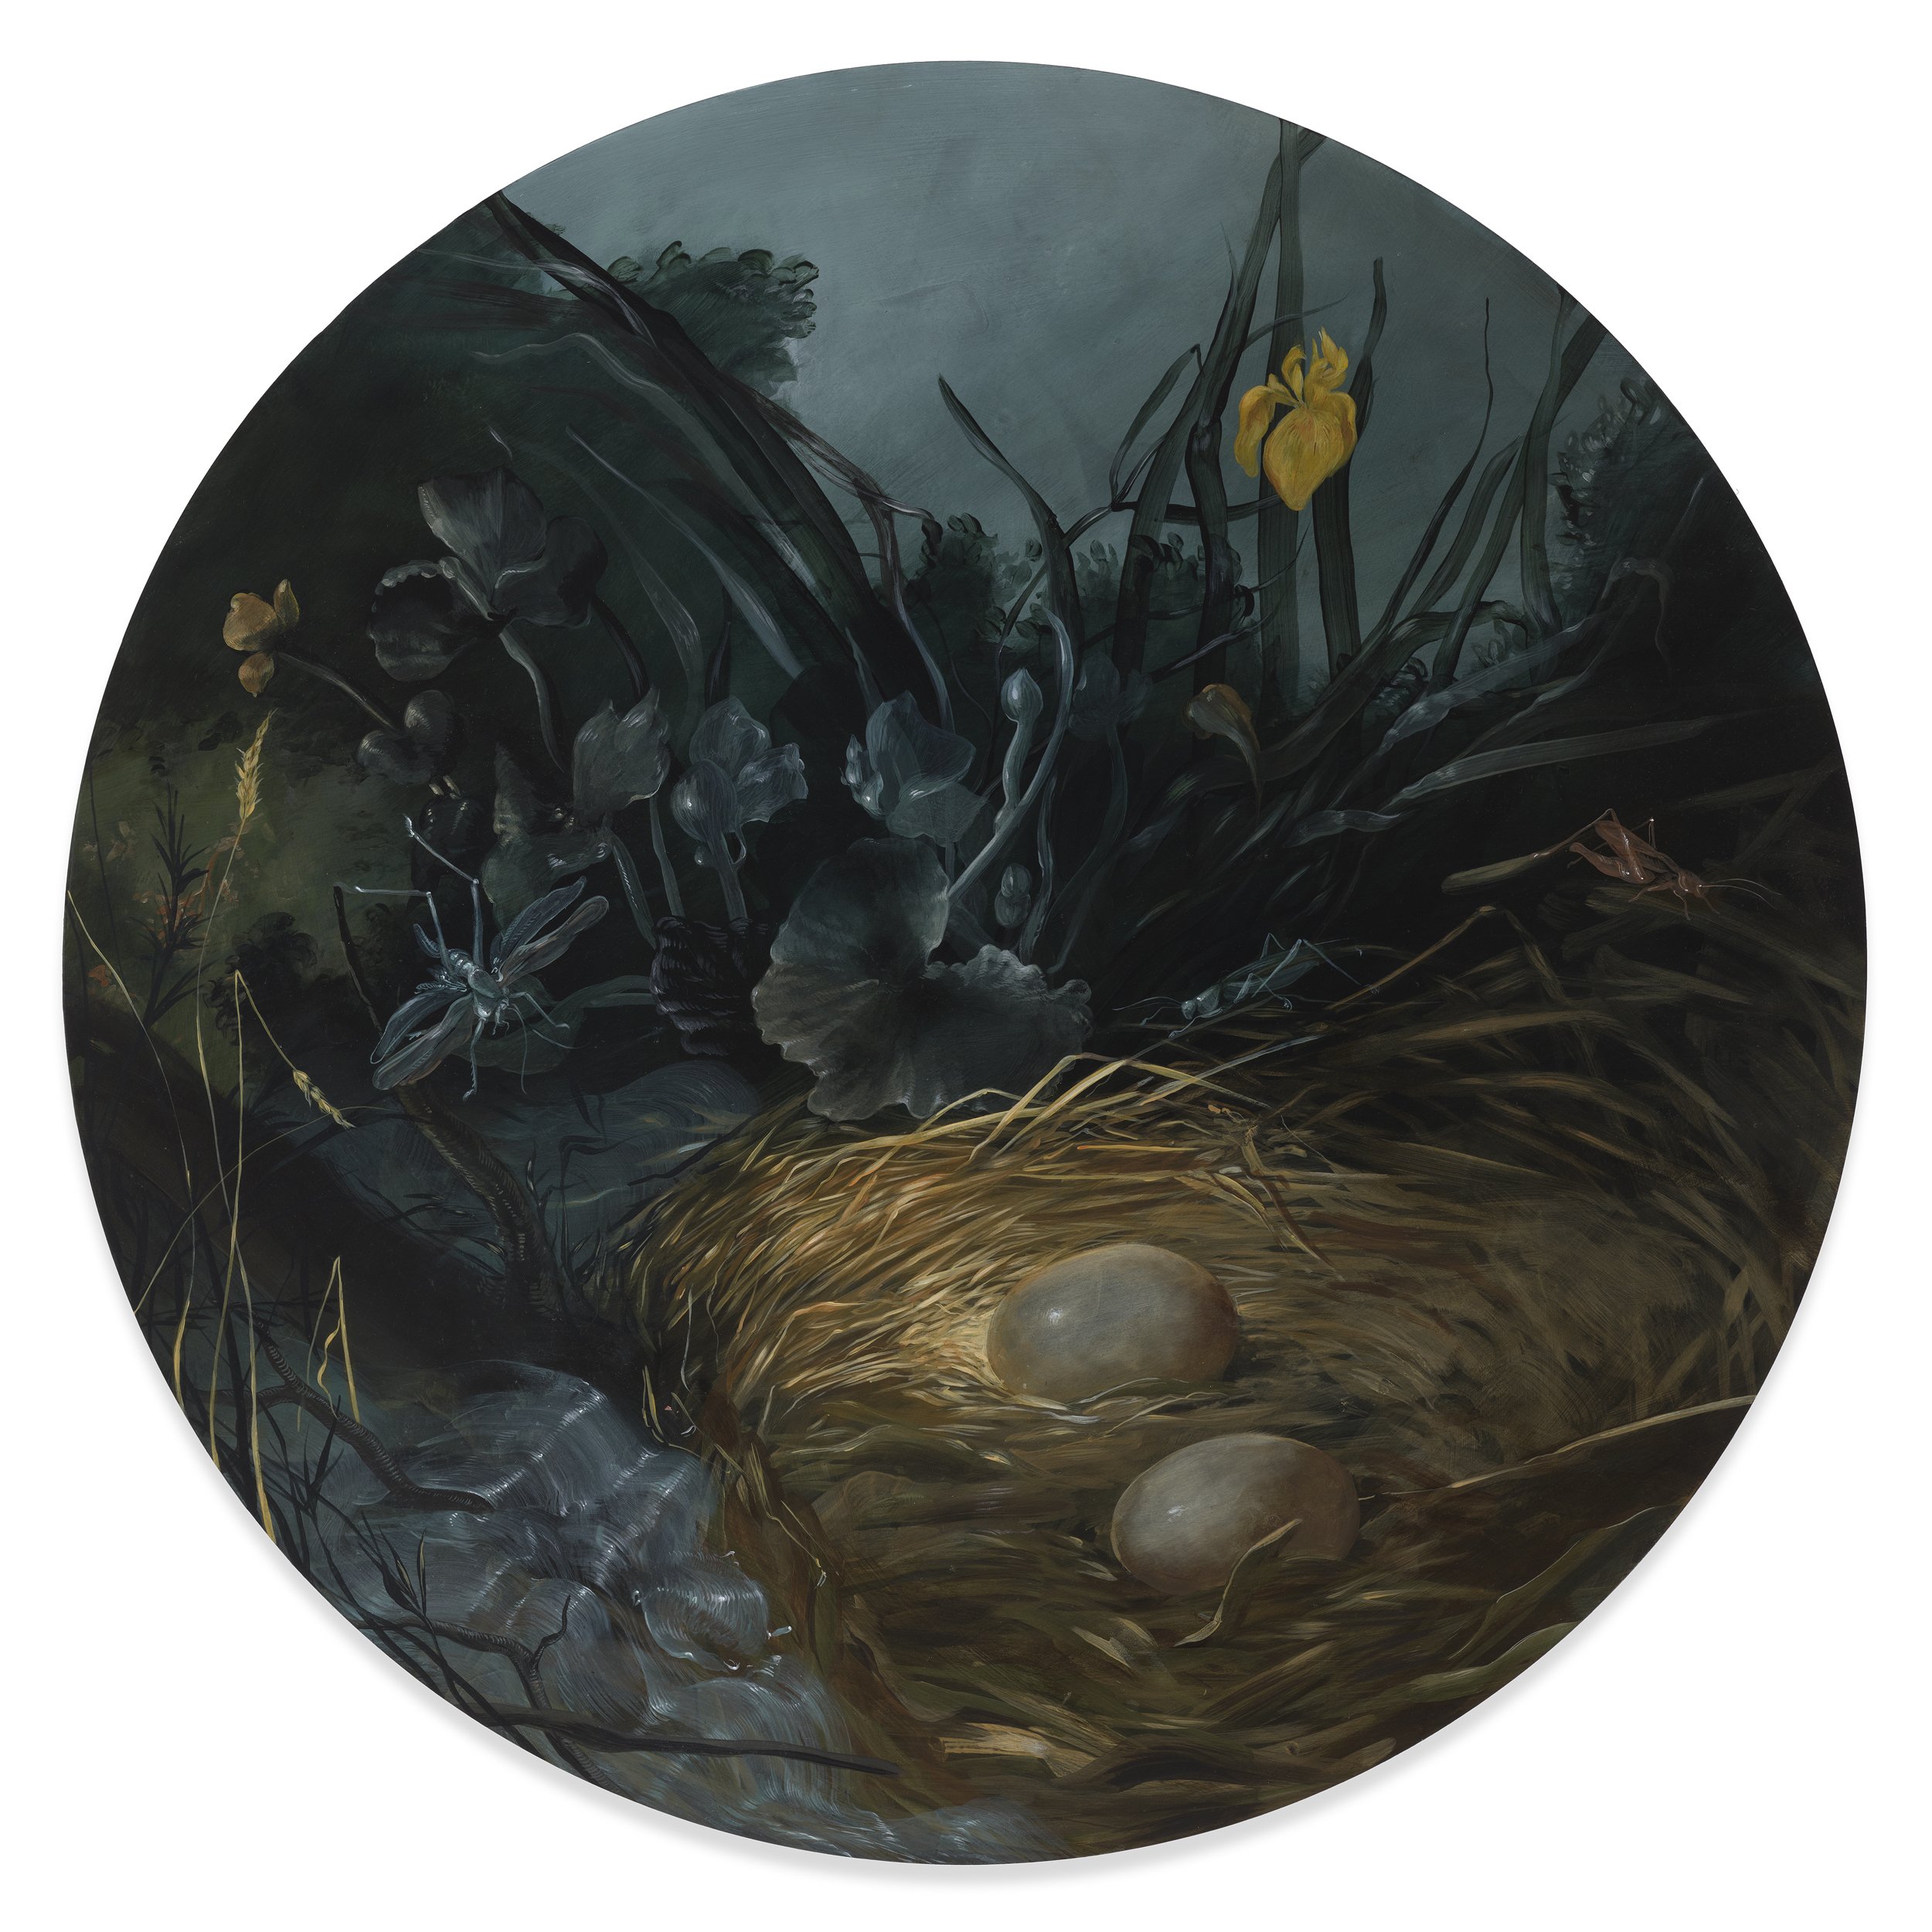  Still Life with Waterlogged Nest, acrylic on round panel  60.96h x 60.96w x 1.27d cm 